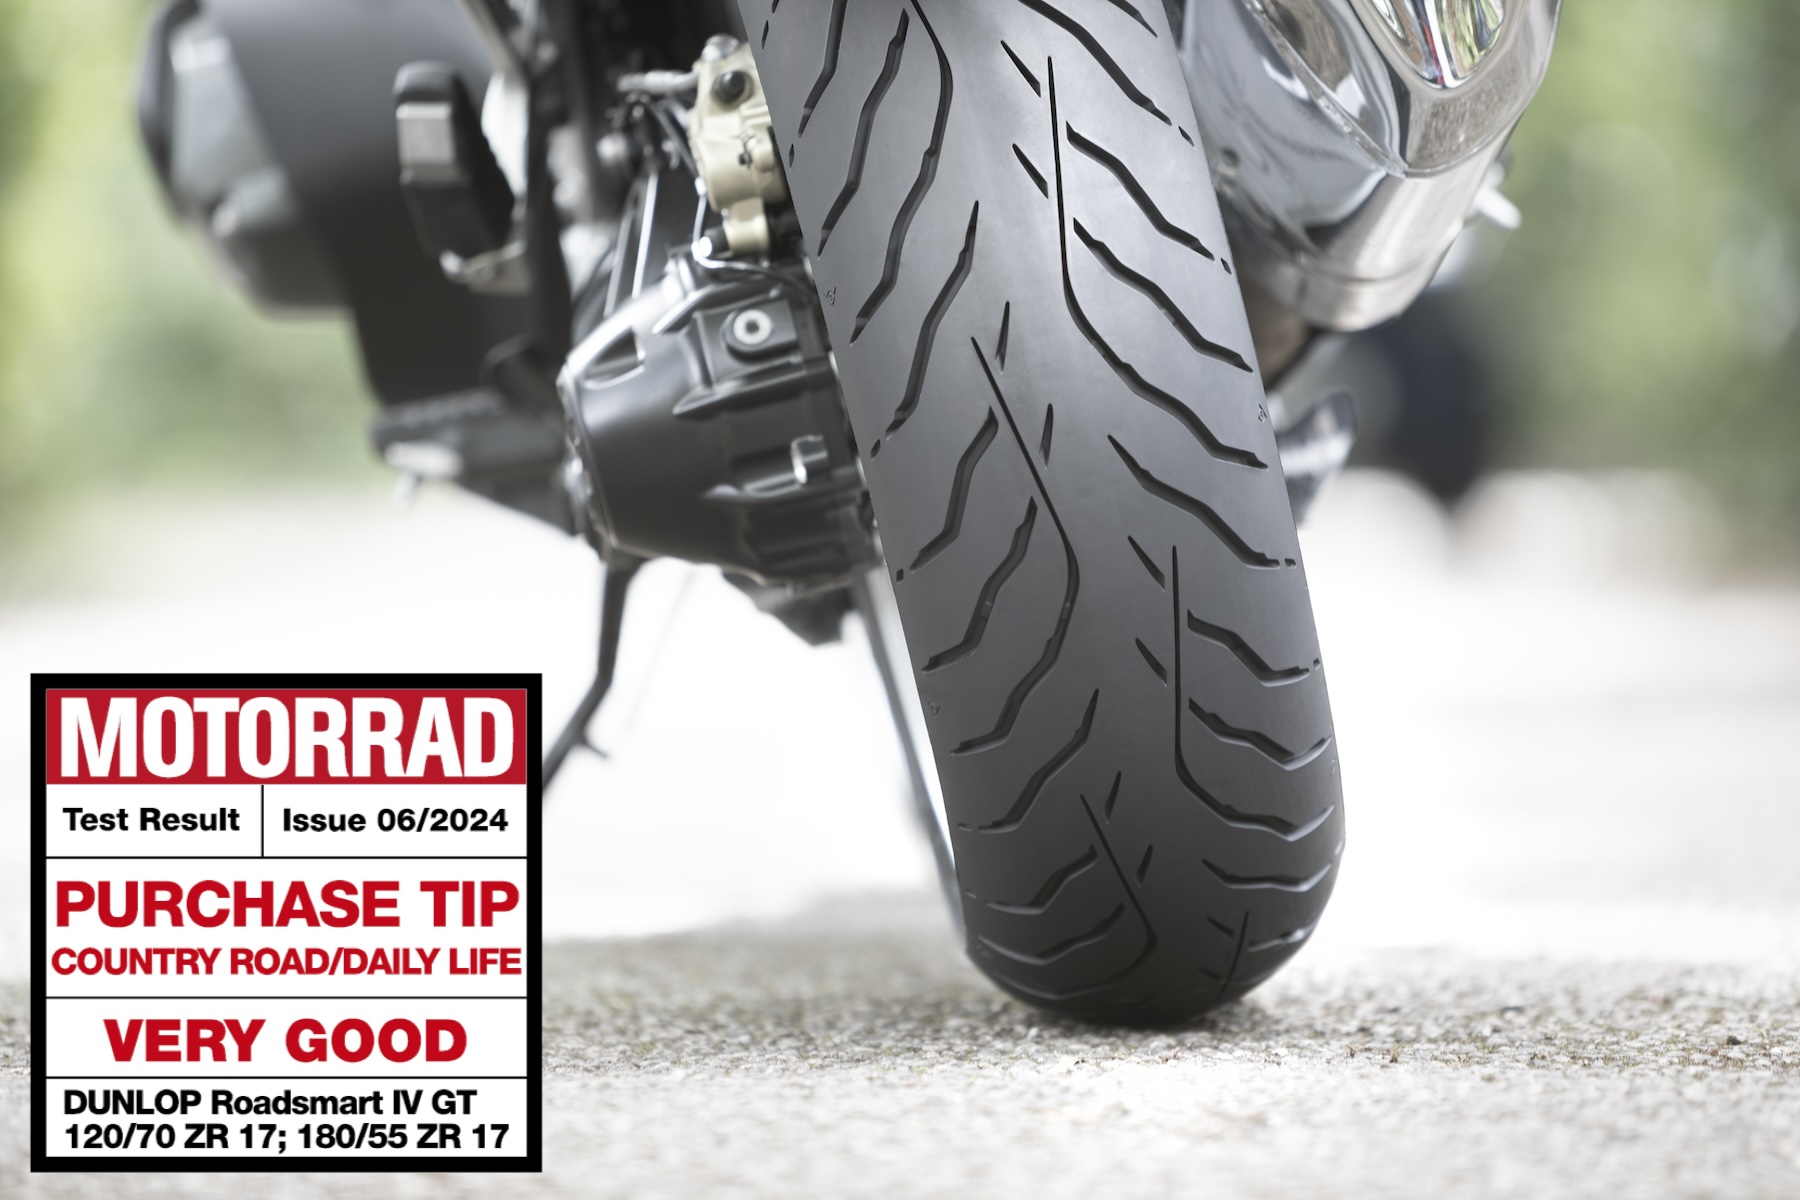 Motorrad magazine test rates Dunlop RoadSmart IV ‘Very Good’